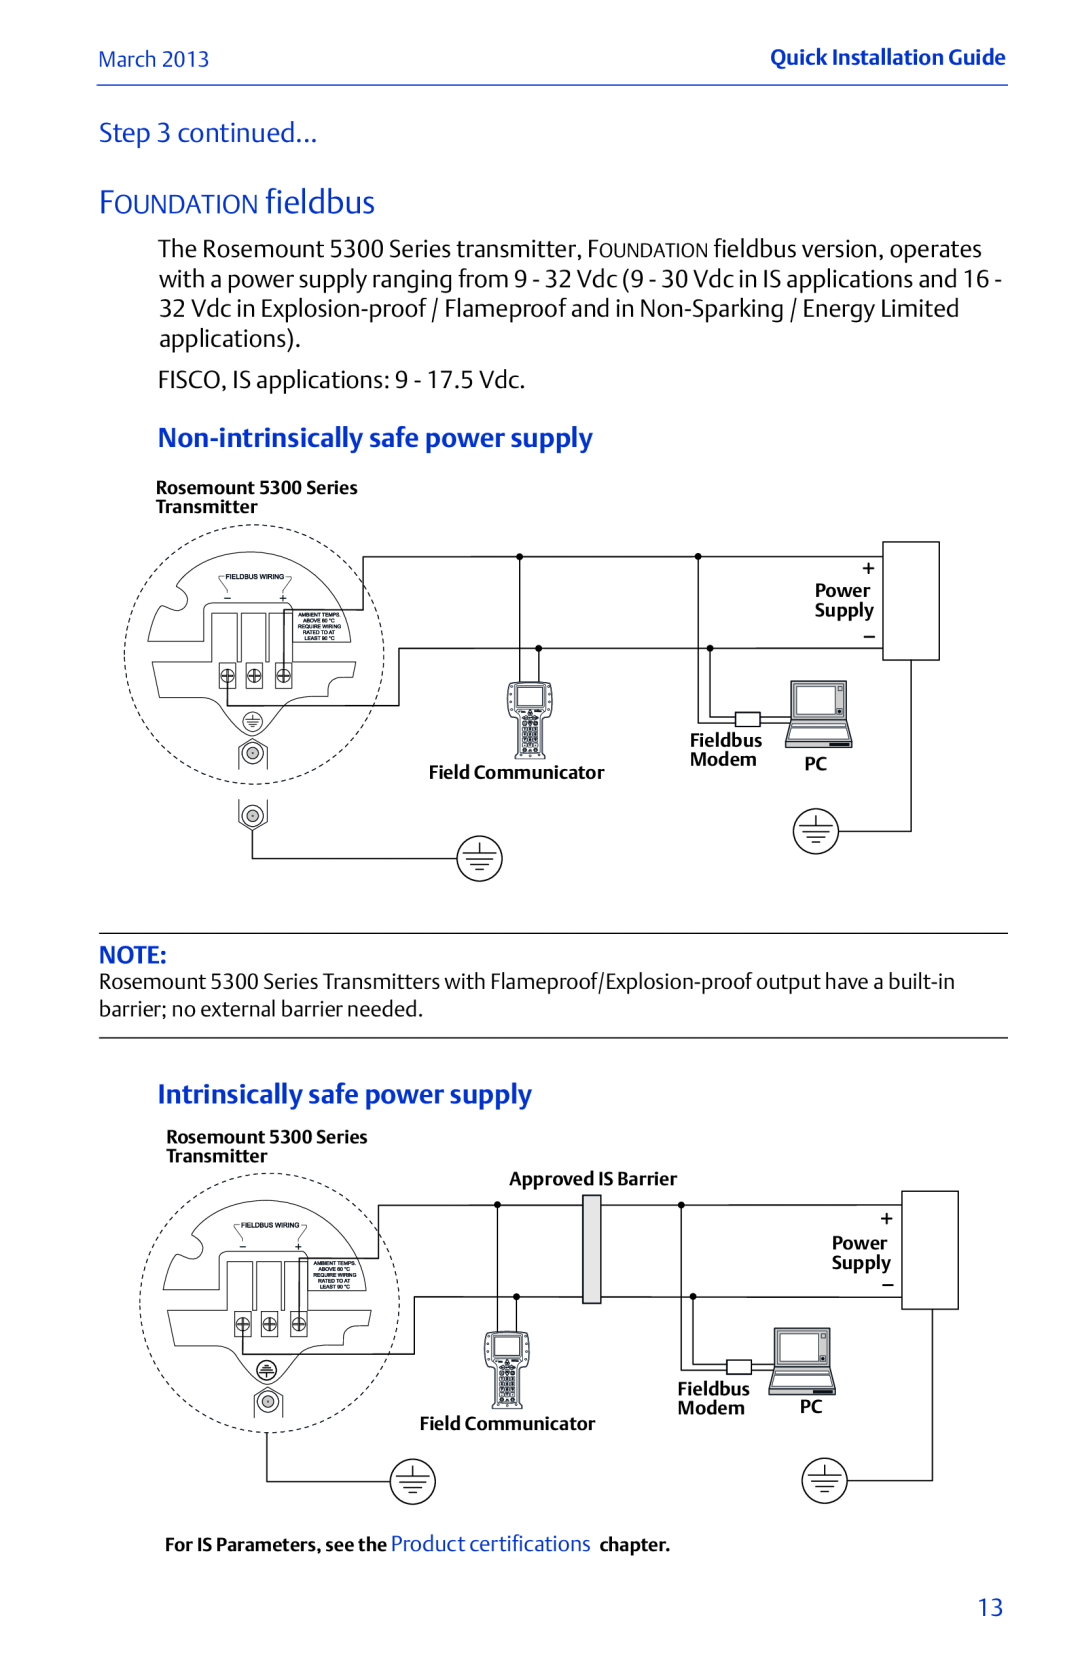 Emerson 00825-0100-4530 Rev EC manual continued FOUNDATION fieldbus, Non-intrinsicallysafe power supply 